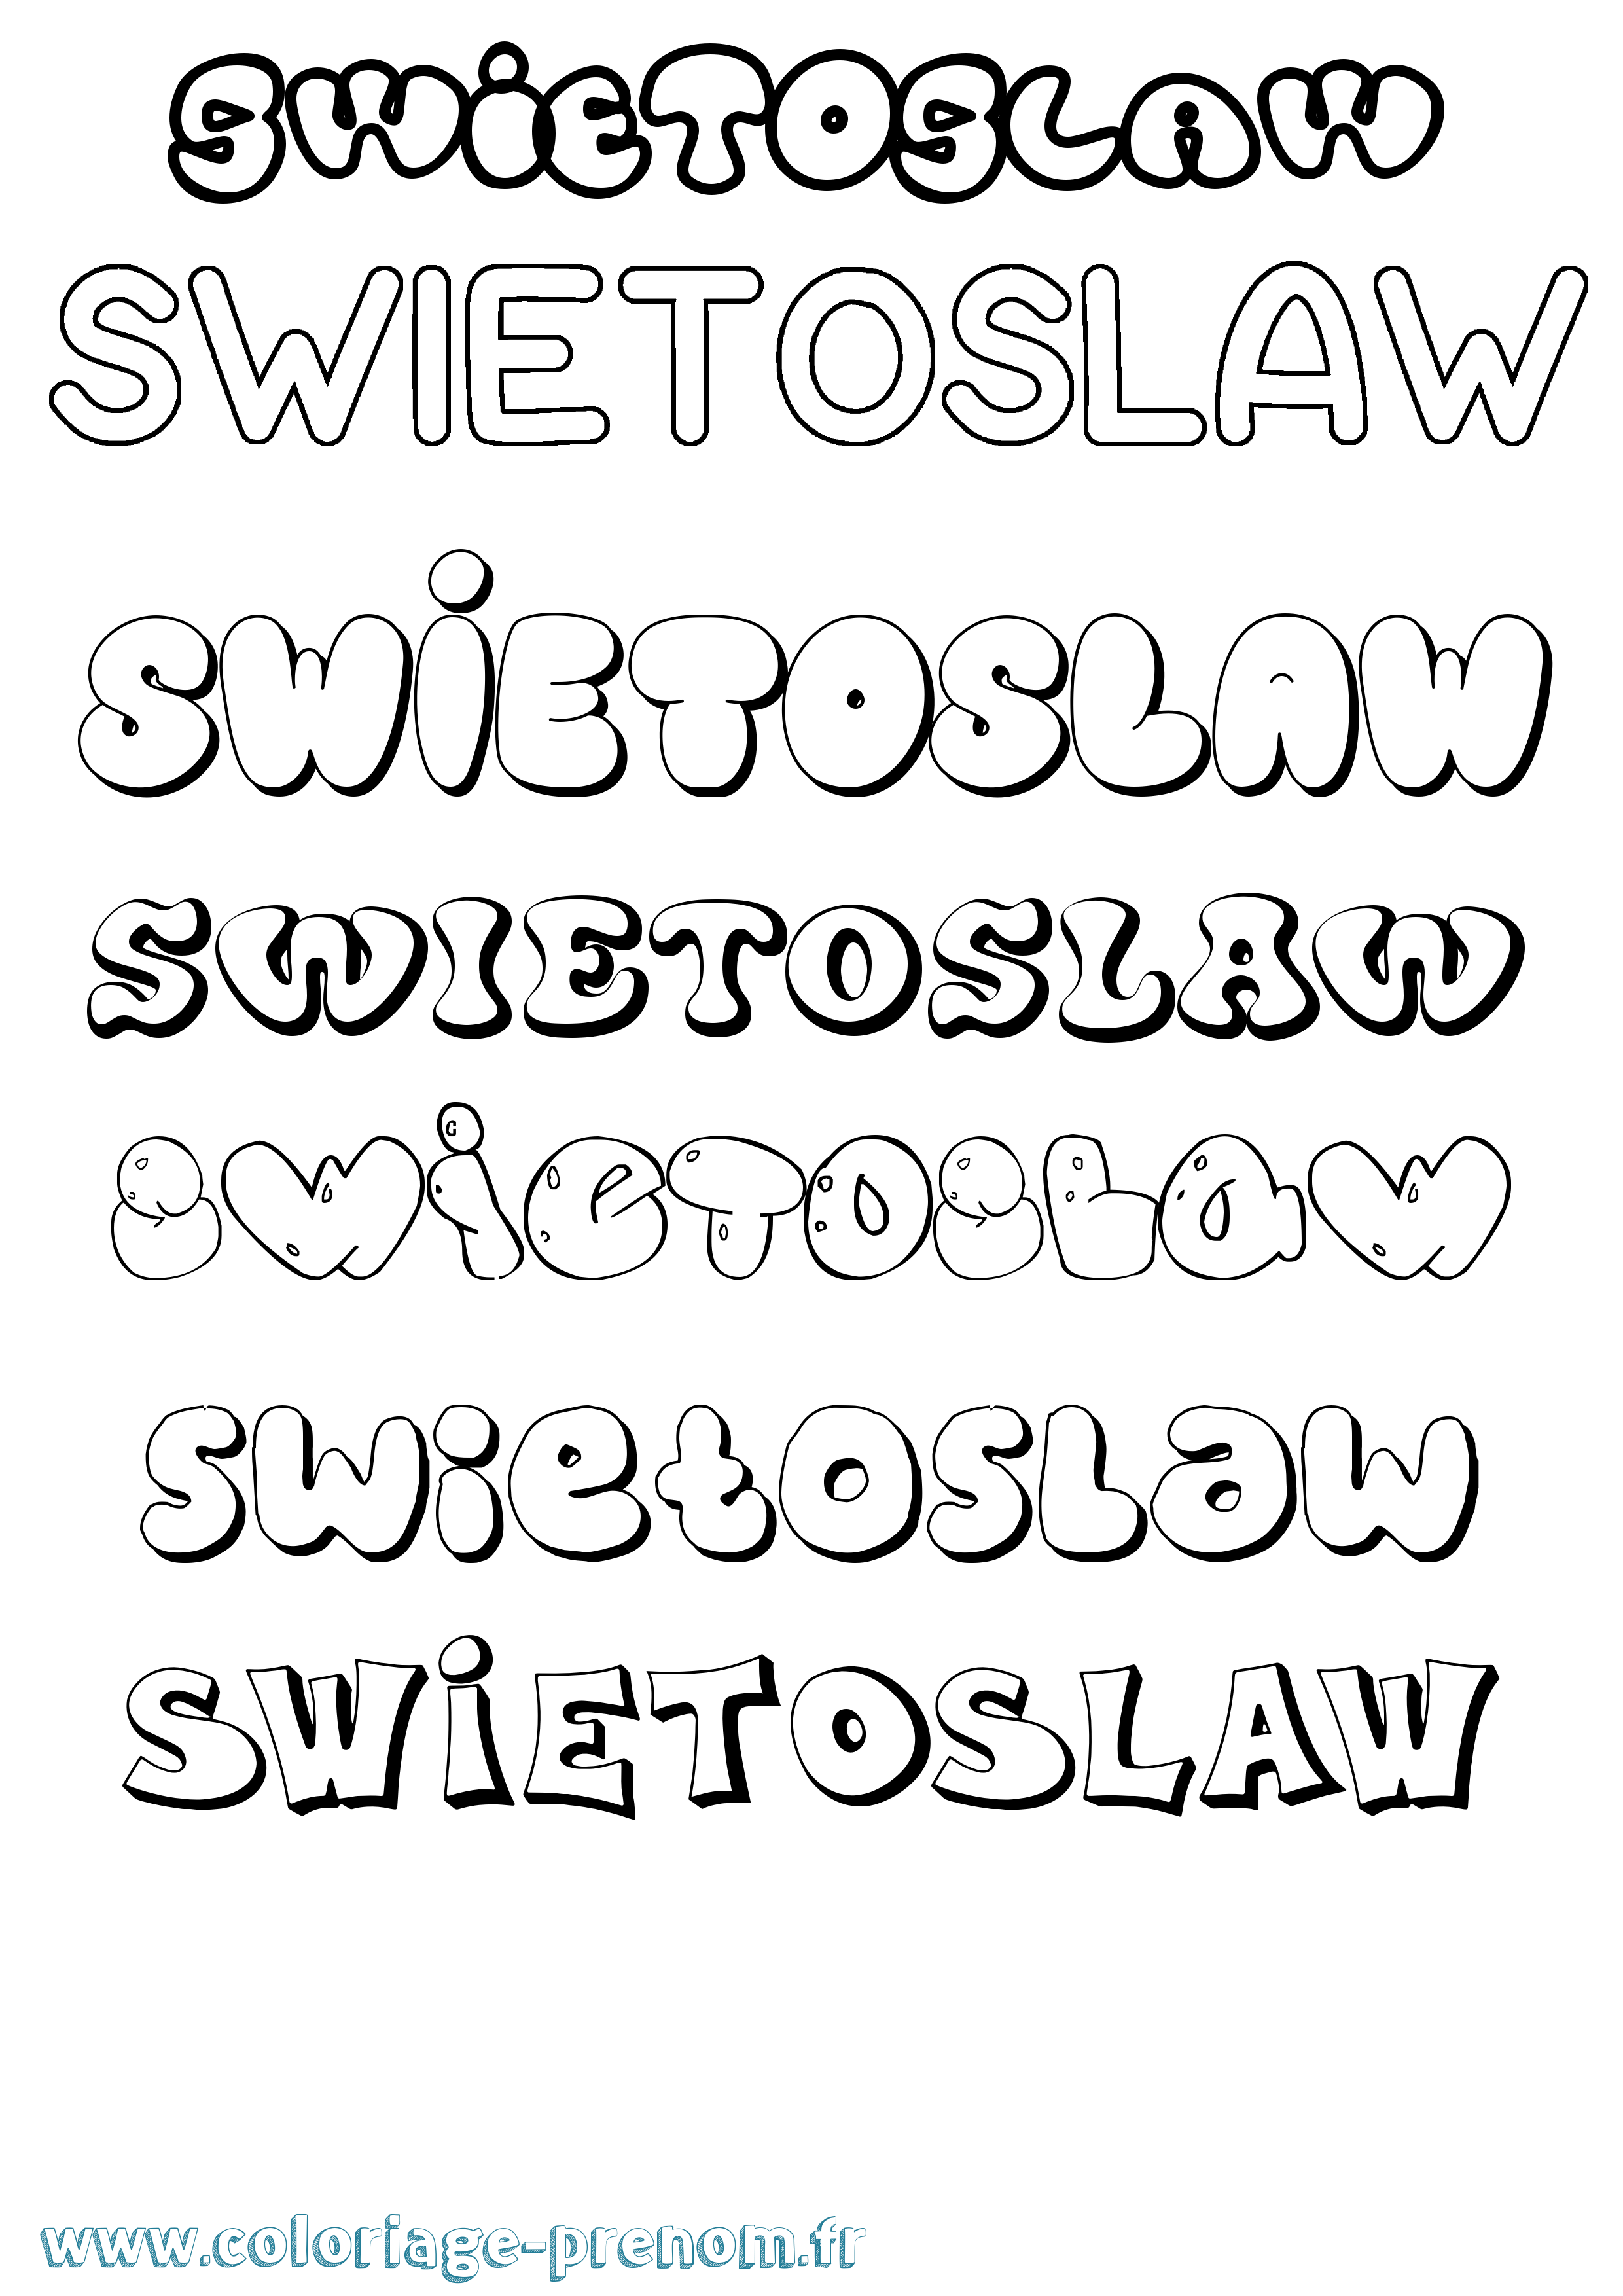 Coloriage prénom Swietoslaw Bubble